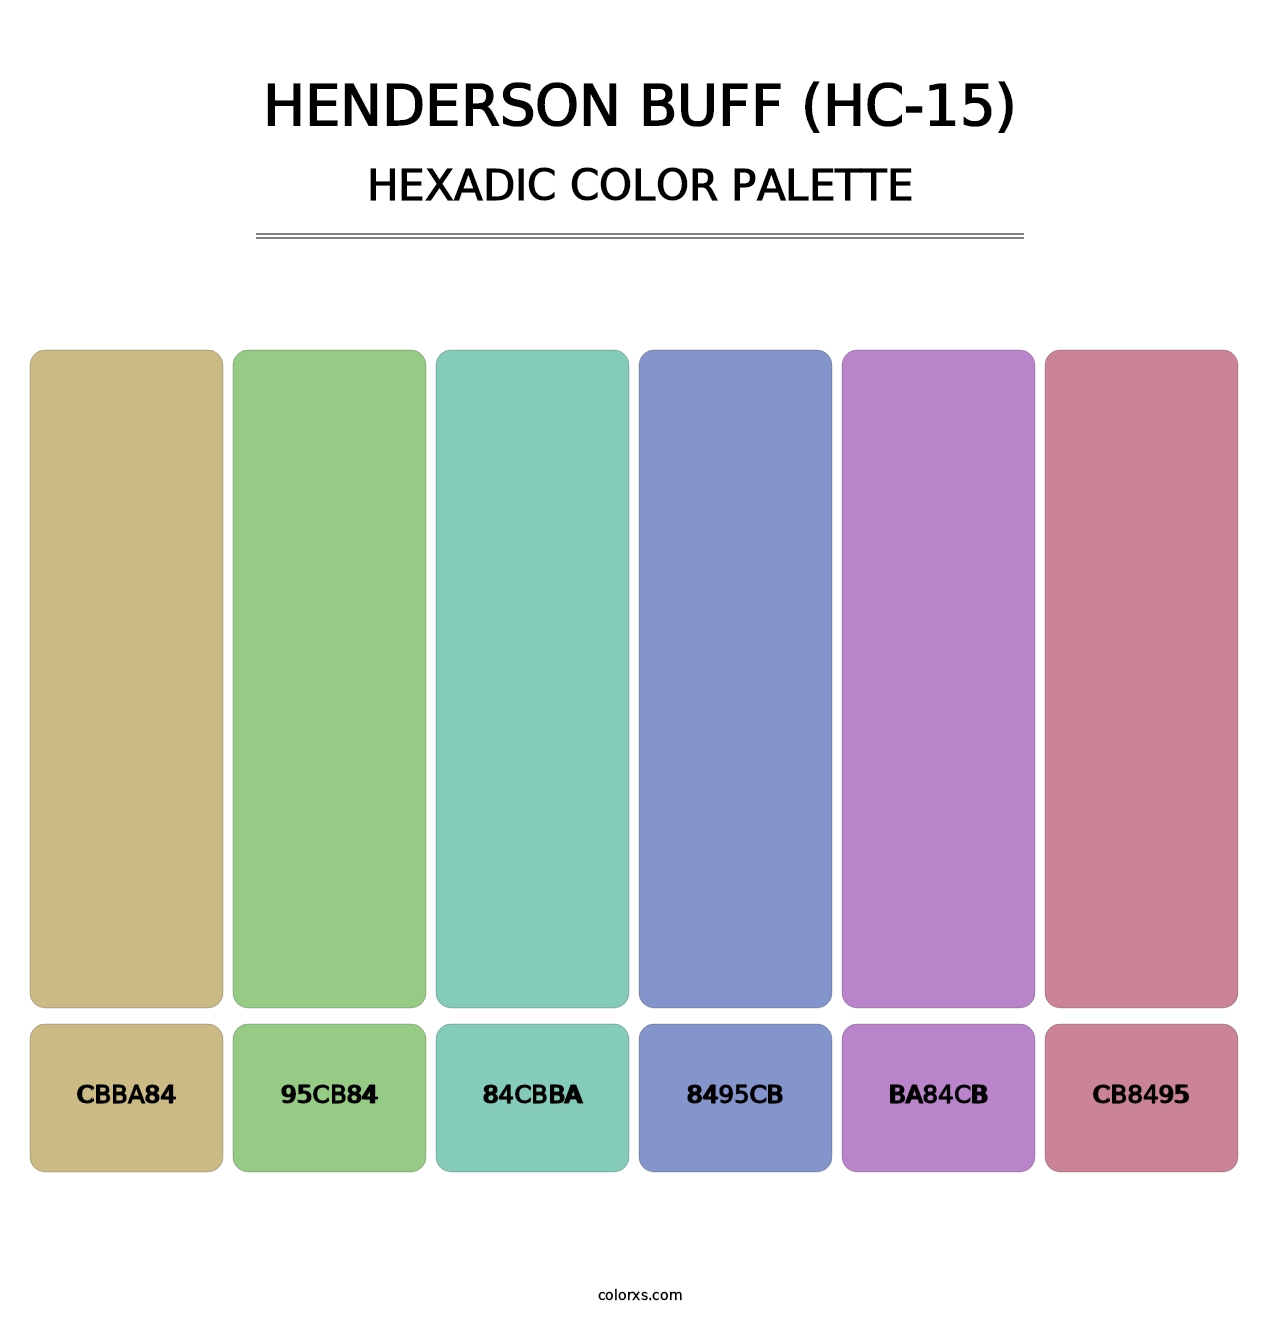 Henderson Buff (HC-15) - Hexadic Color Palette